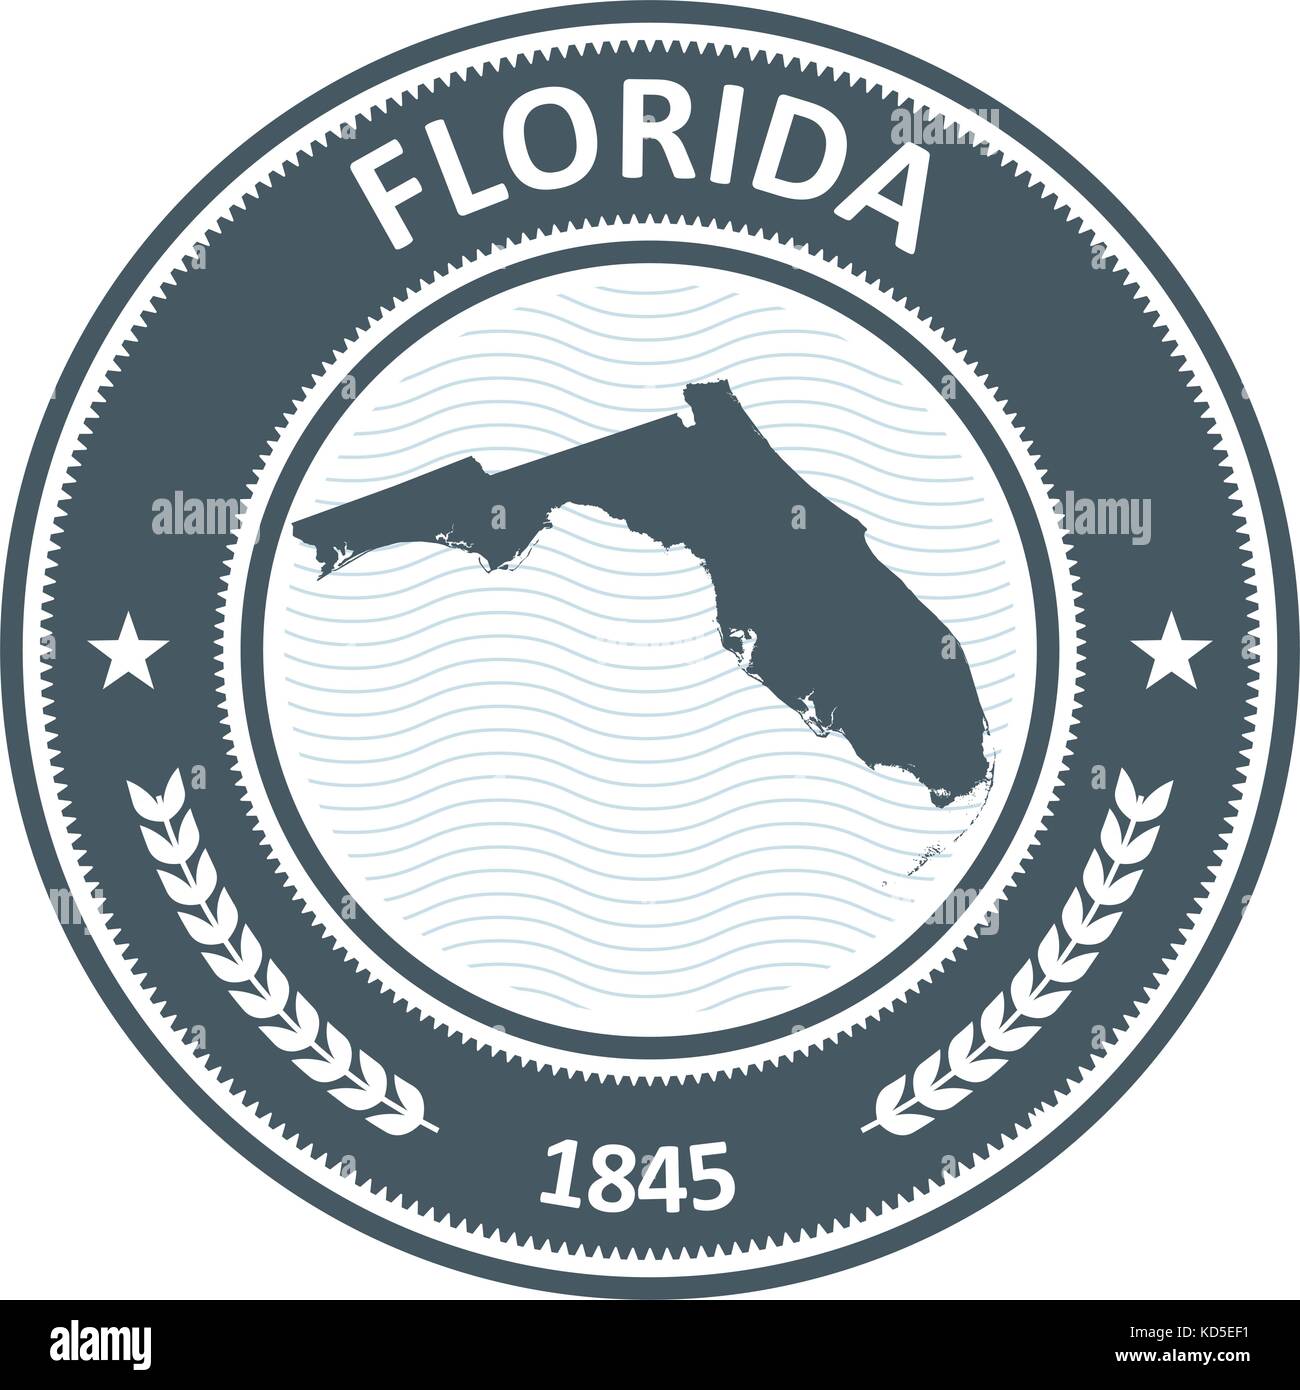 Florida Stempel mit Karte Kontur Stock Vektor